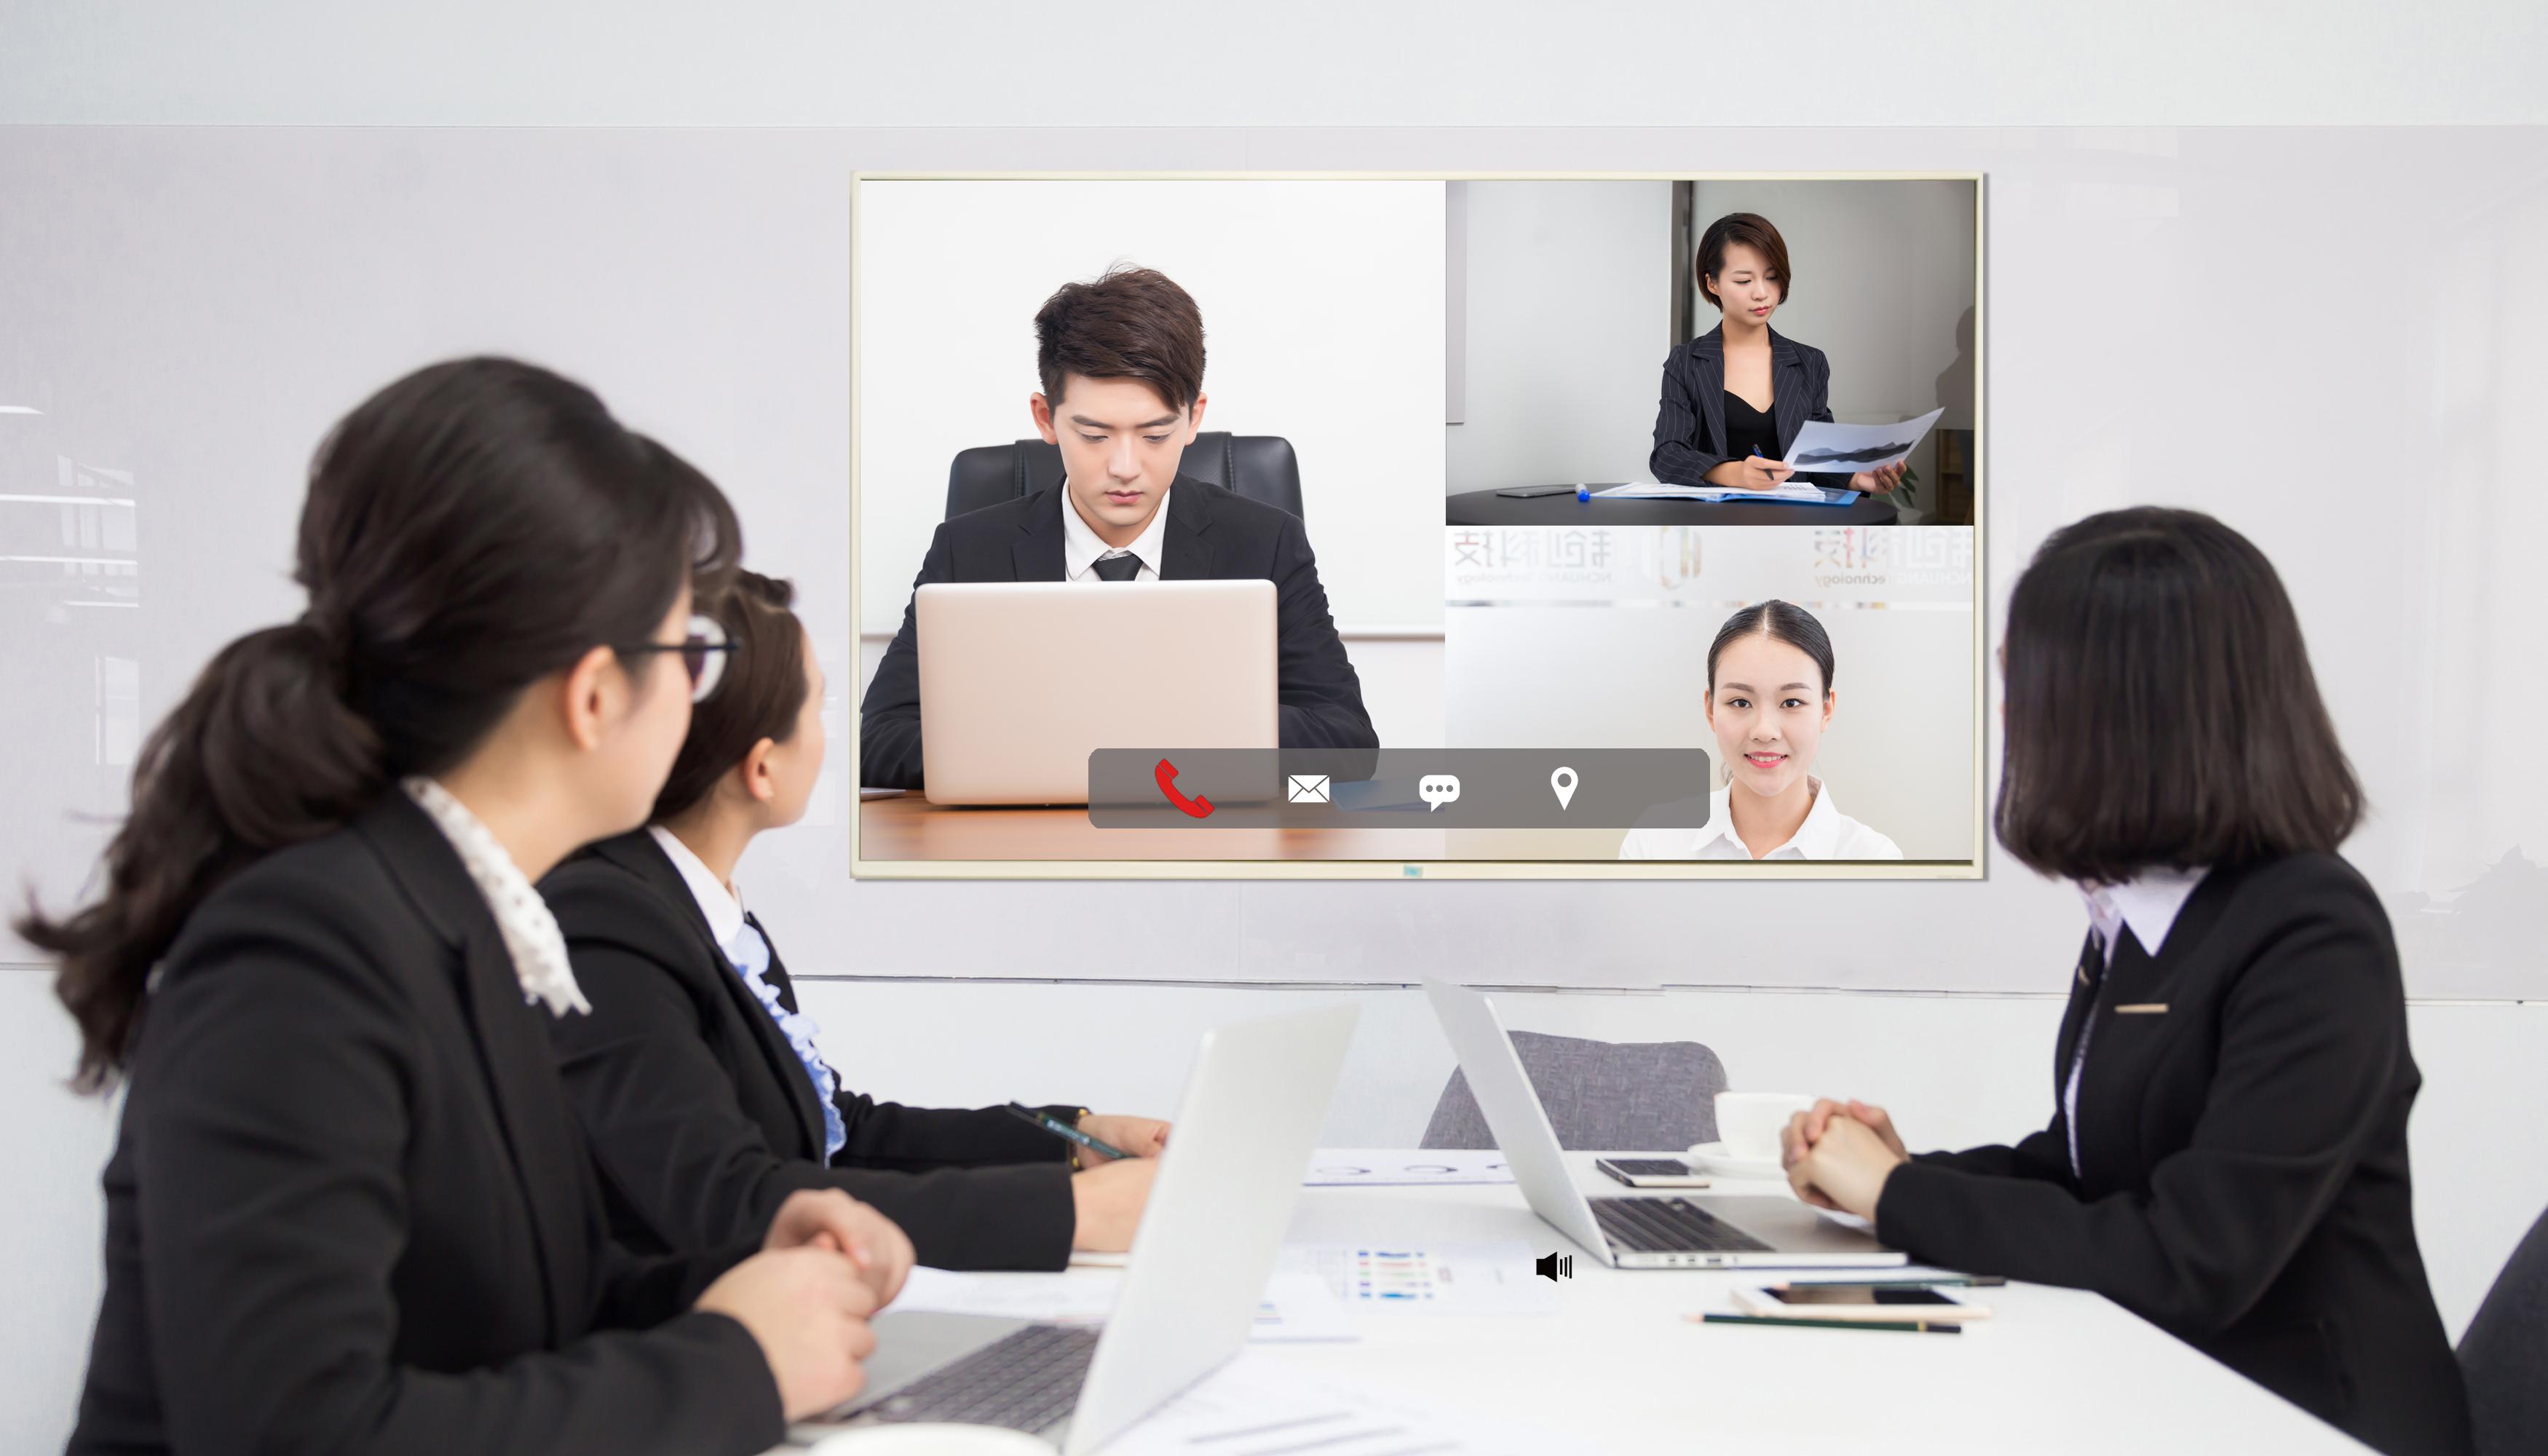 vymeet远程视频会议是企业实现内部高效办公信息化的首选产品 第2张